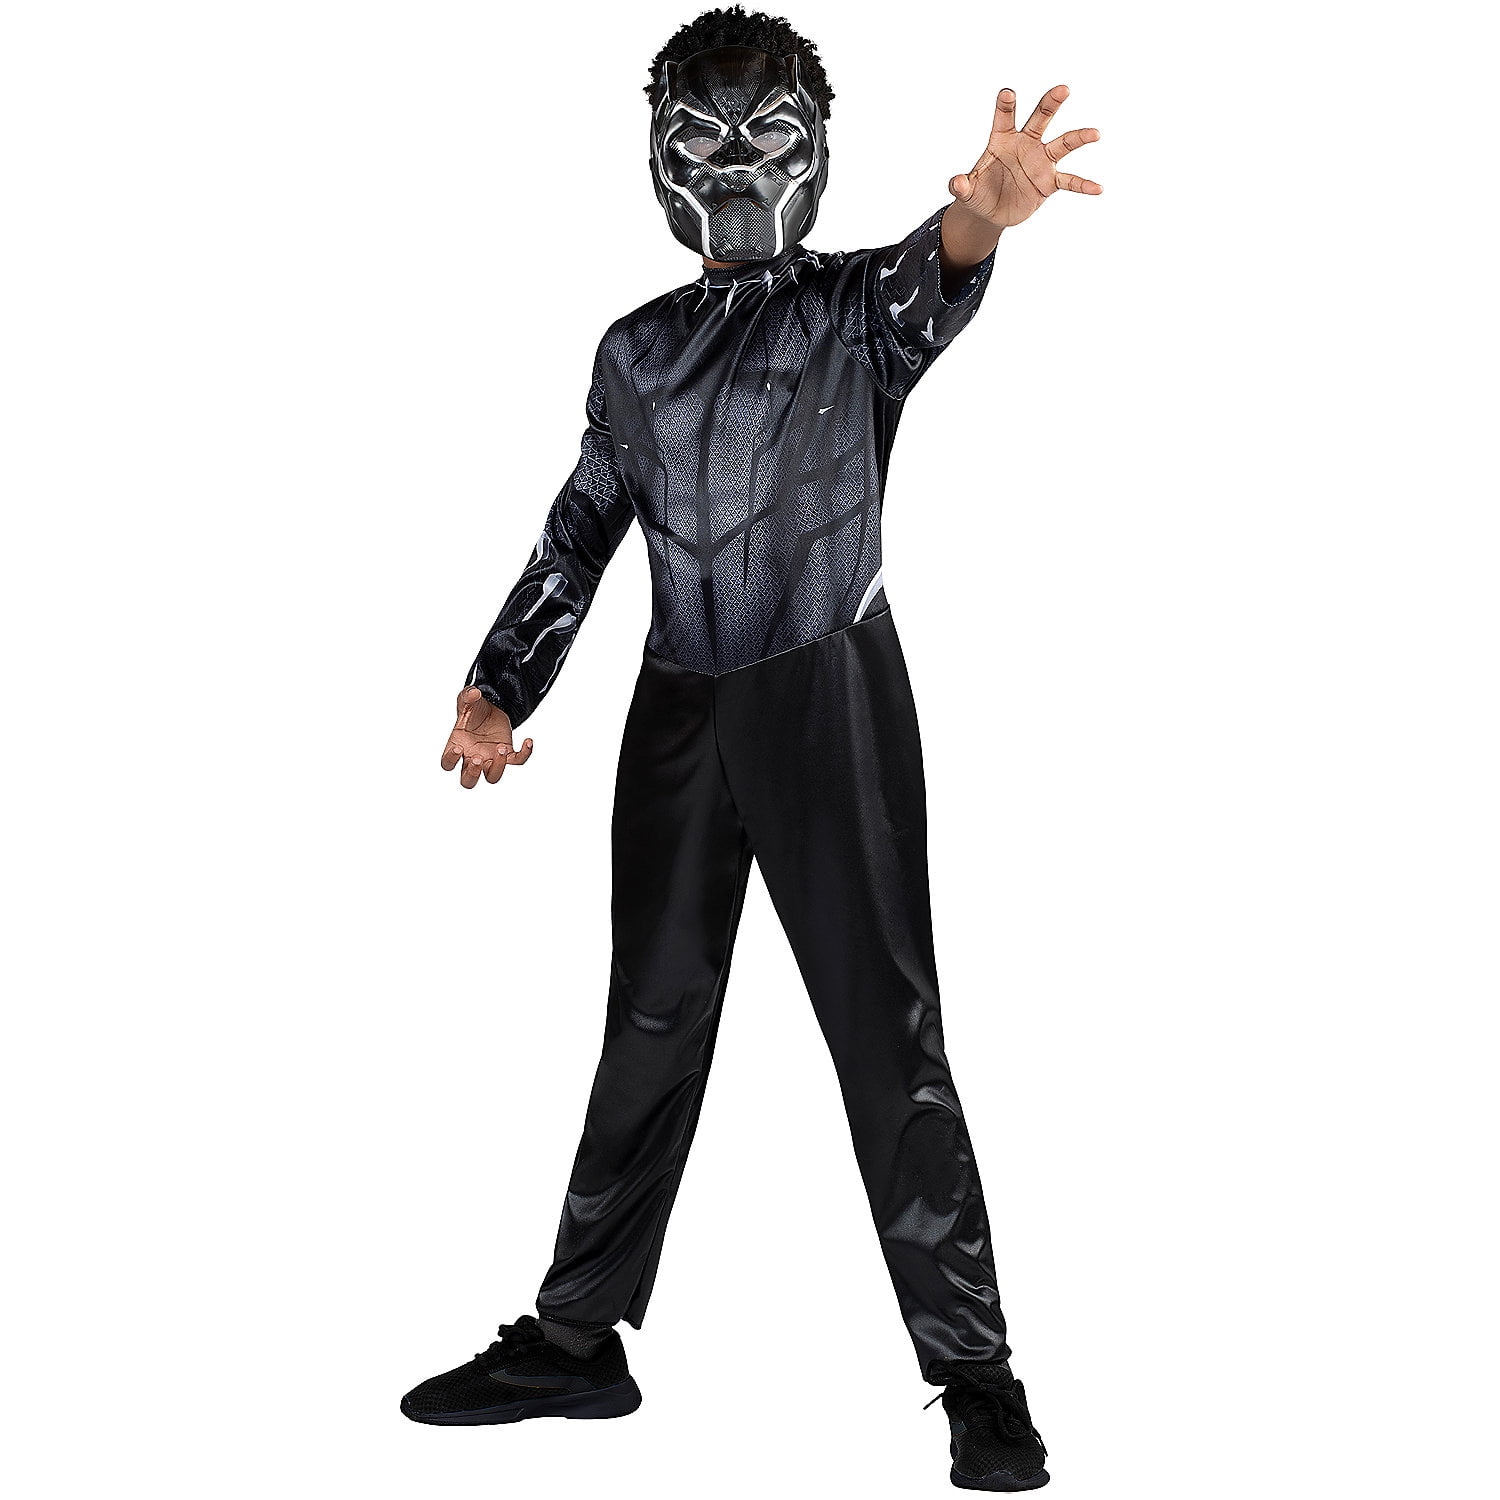 Black Panther Infant Costume